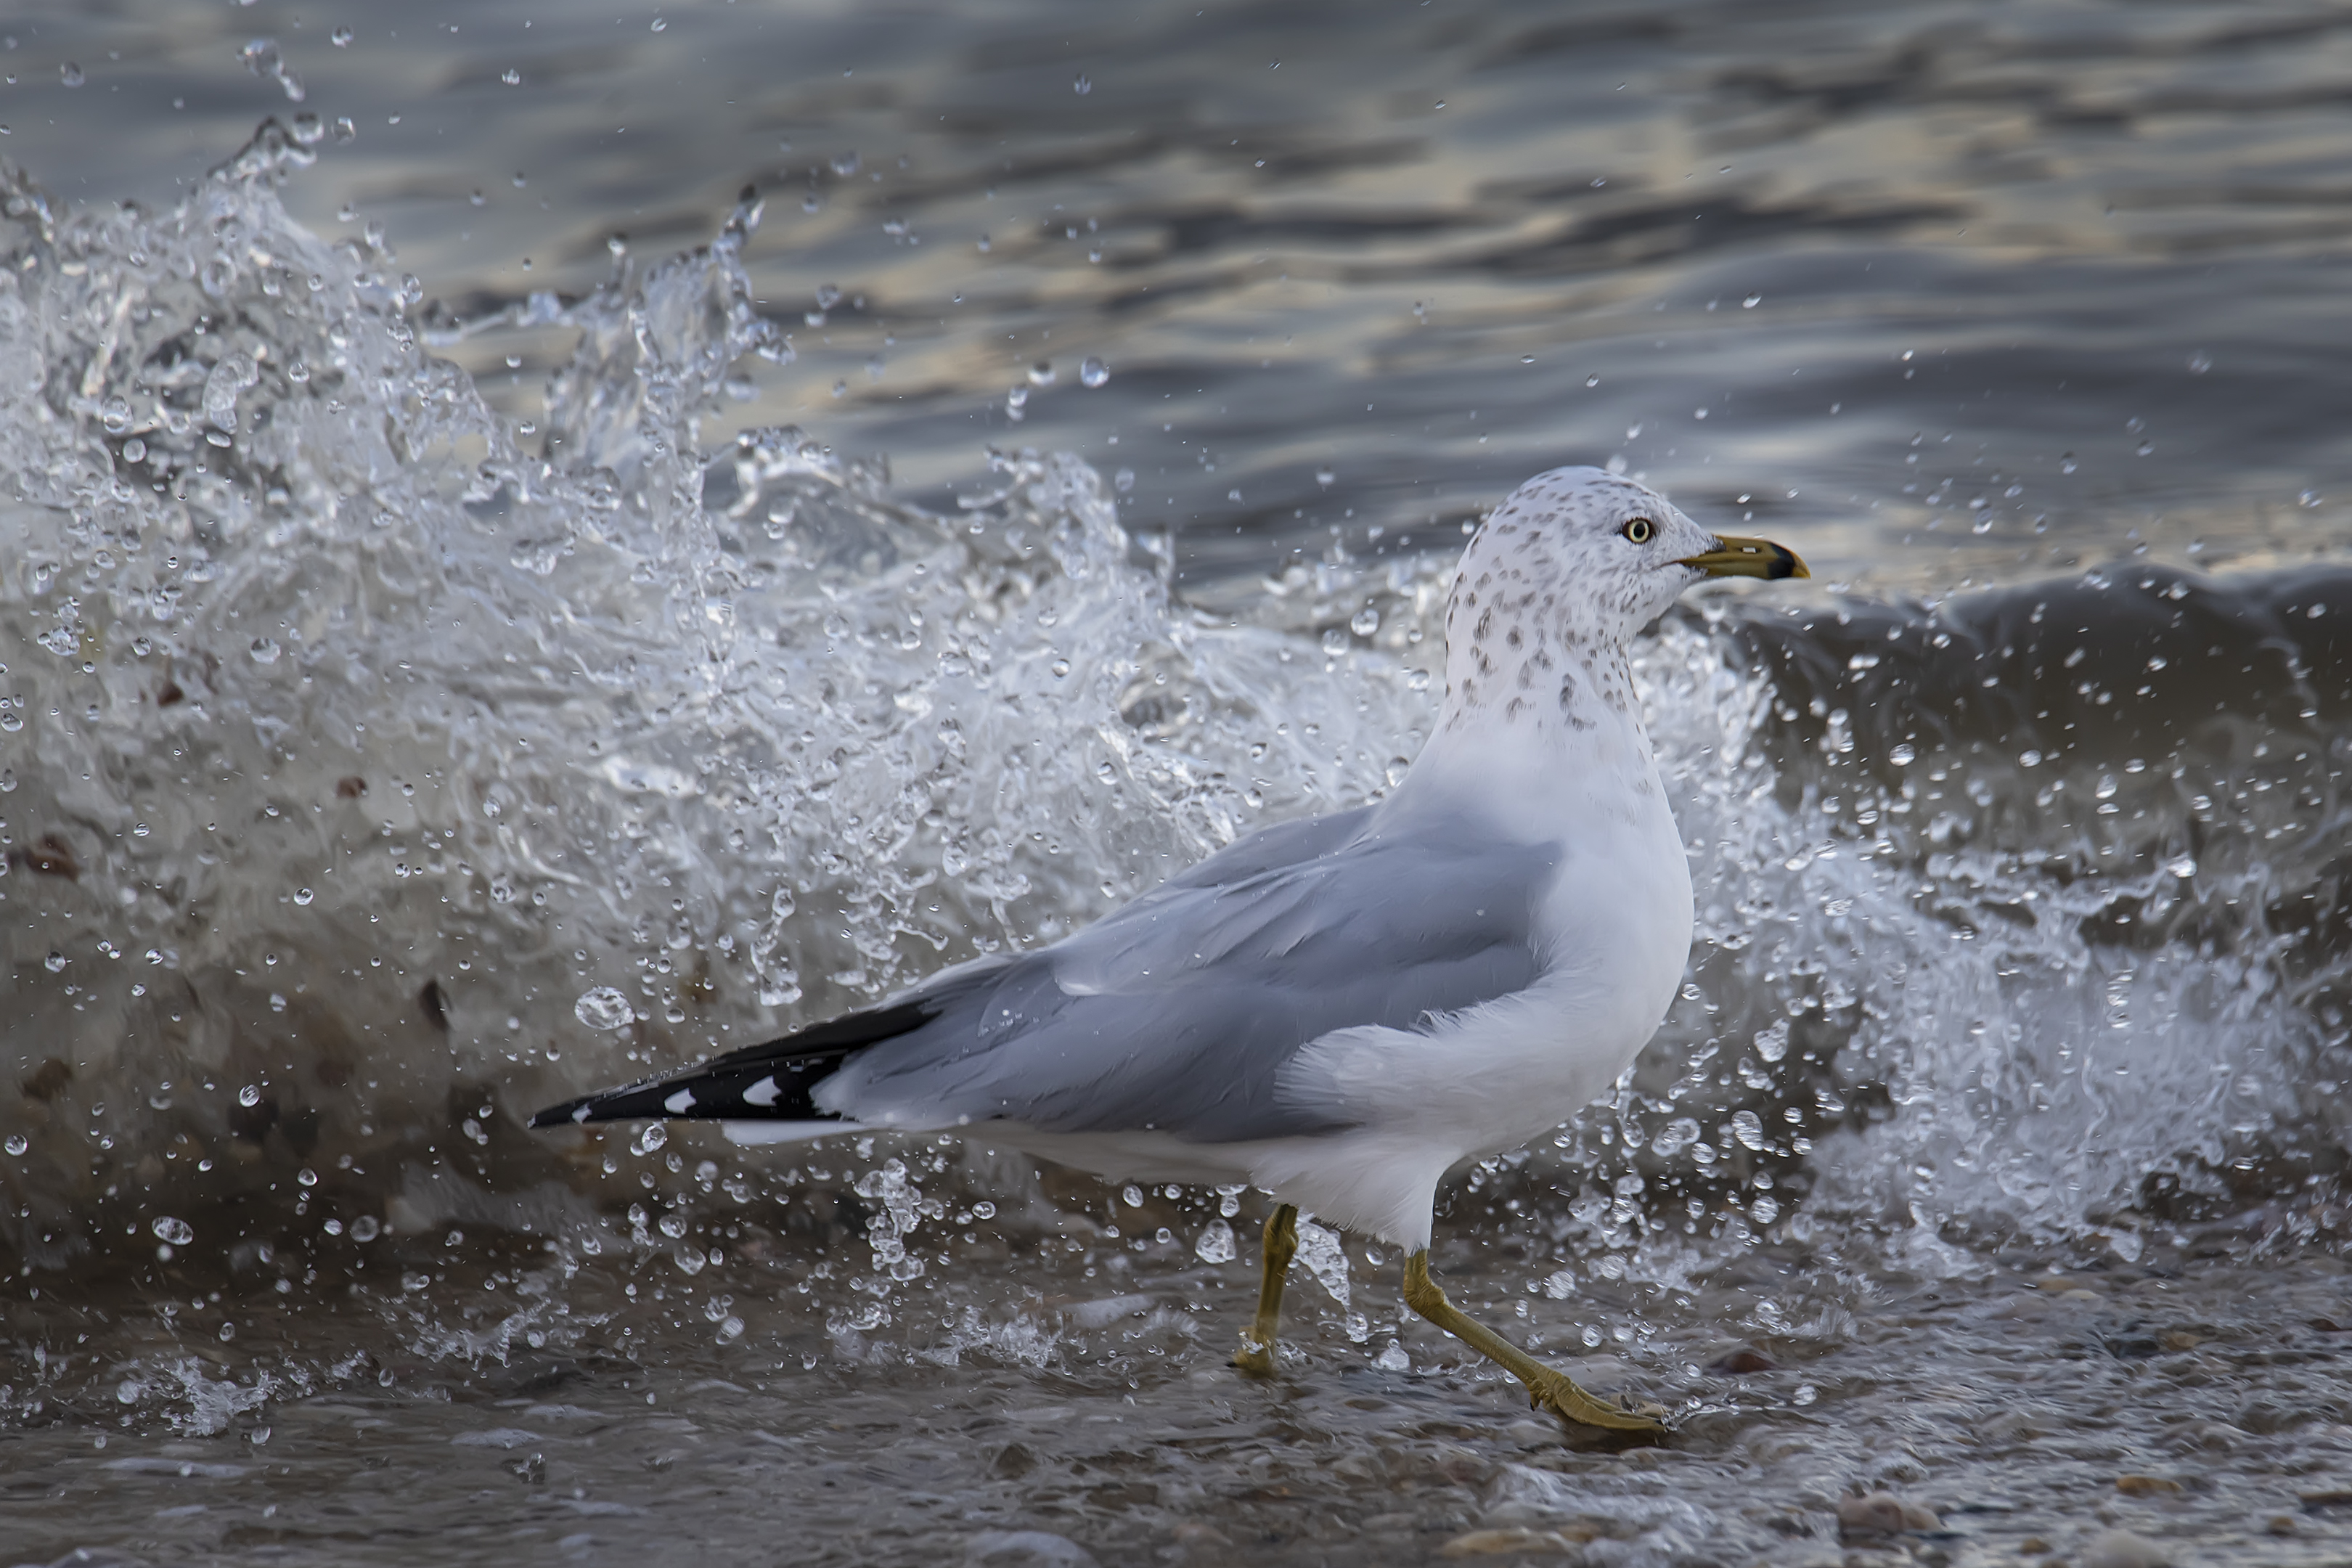 1_Seagull-and-Splash